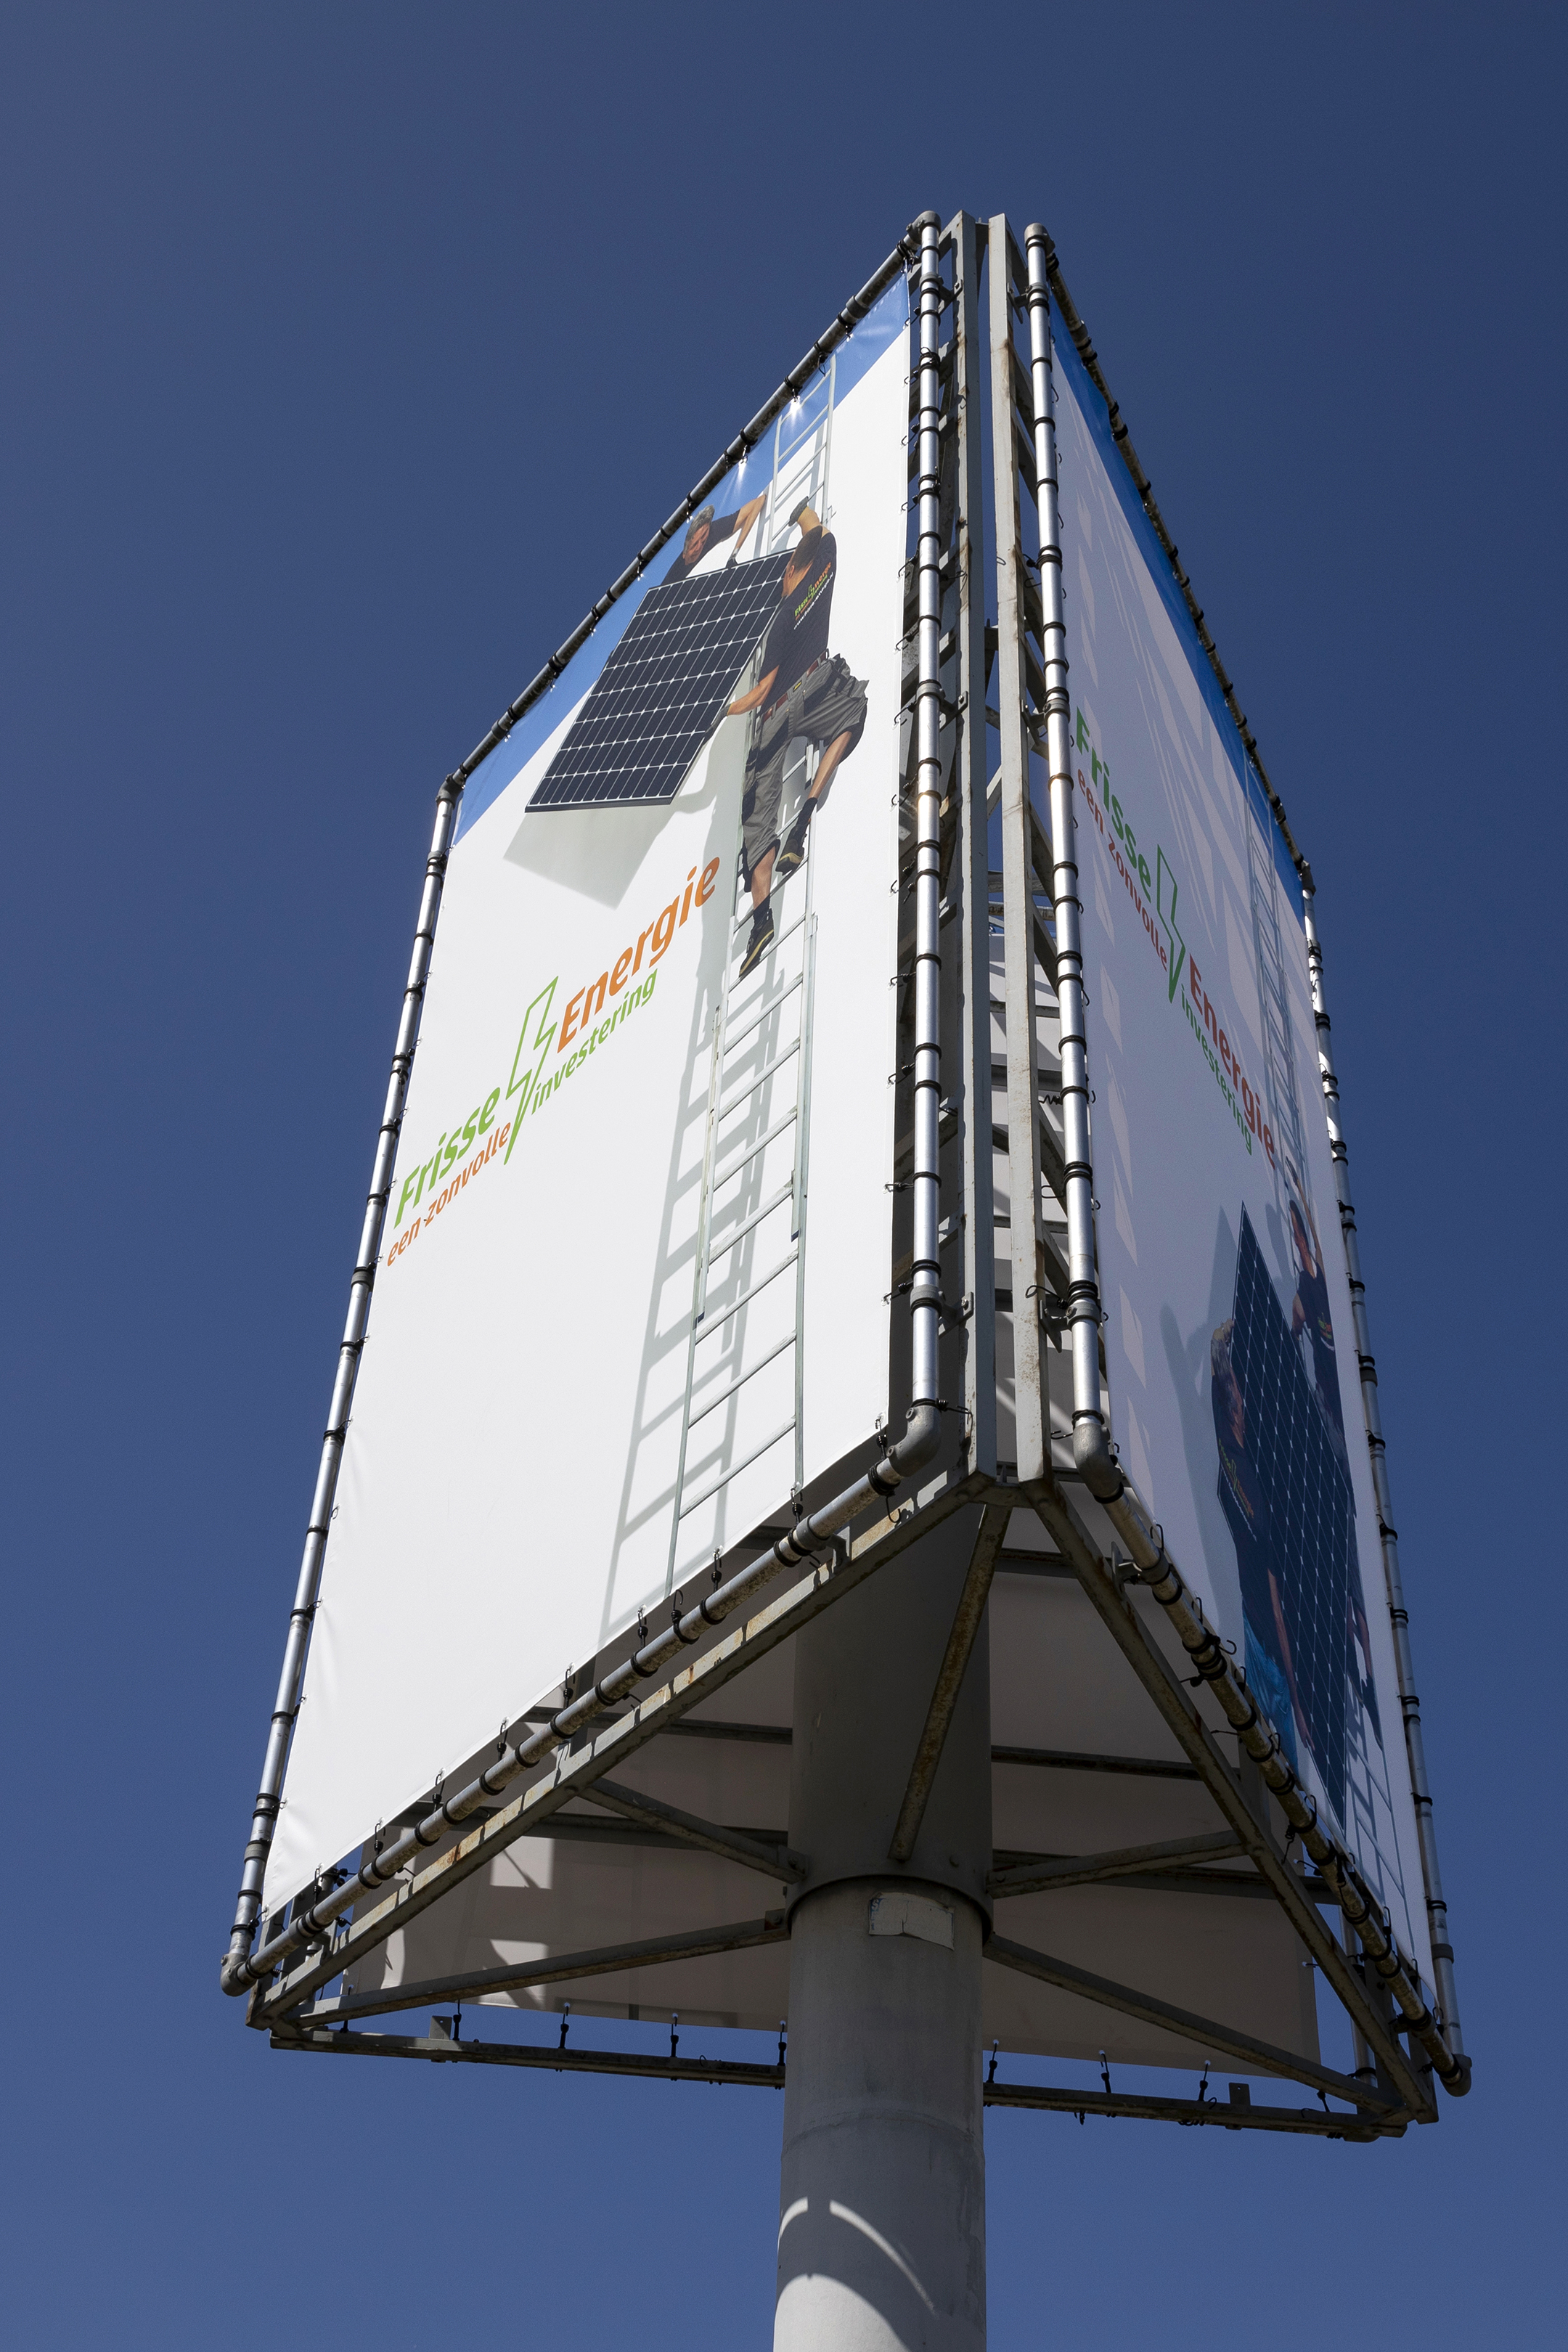 Frisse energie Jurjen Poeles fotografie campagne Arnhem billboard wildplakken grootformaat zonnepanelen groene energie toepassing eindresultaat